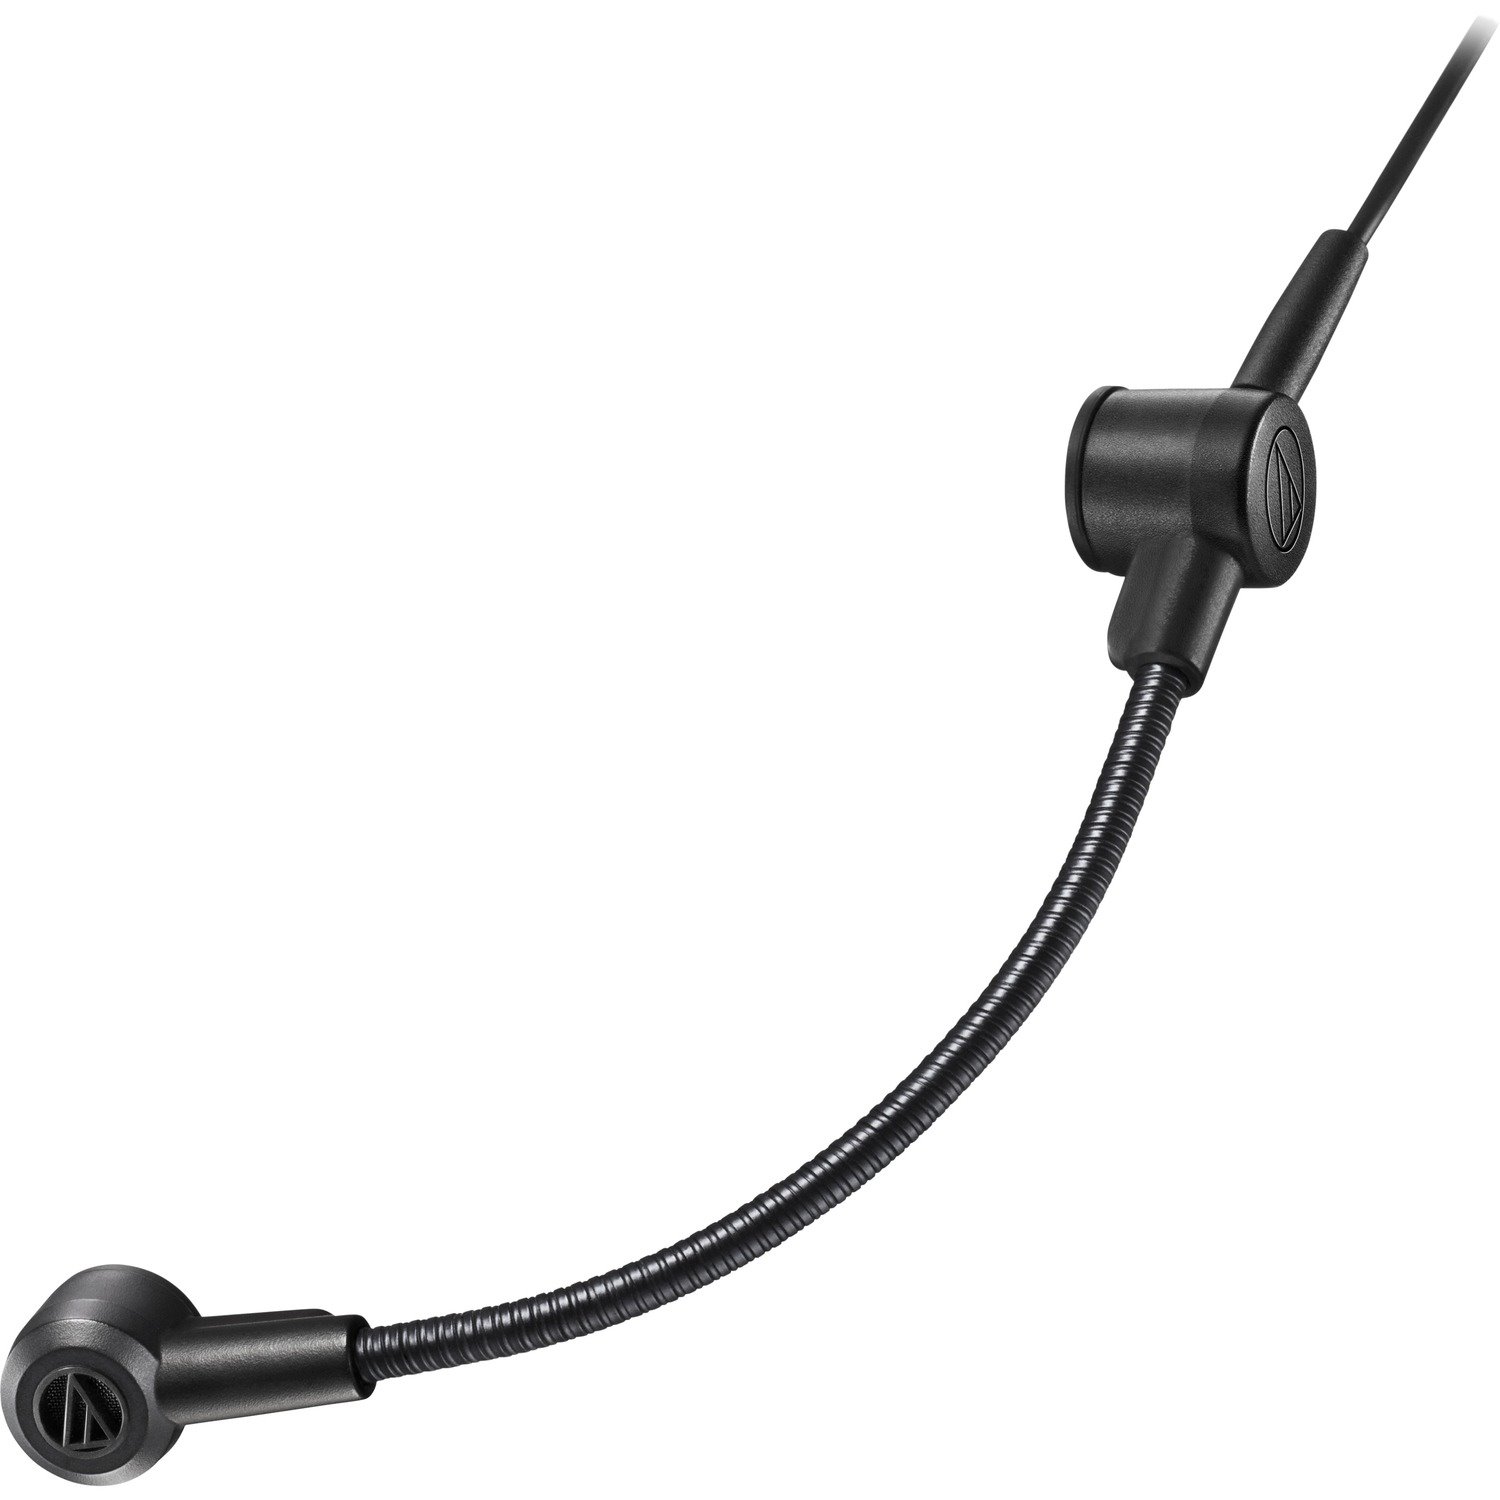 Audio-Technica ATGM2 Wired Condenser Microphone